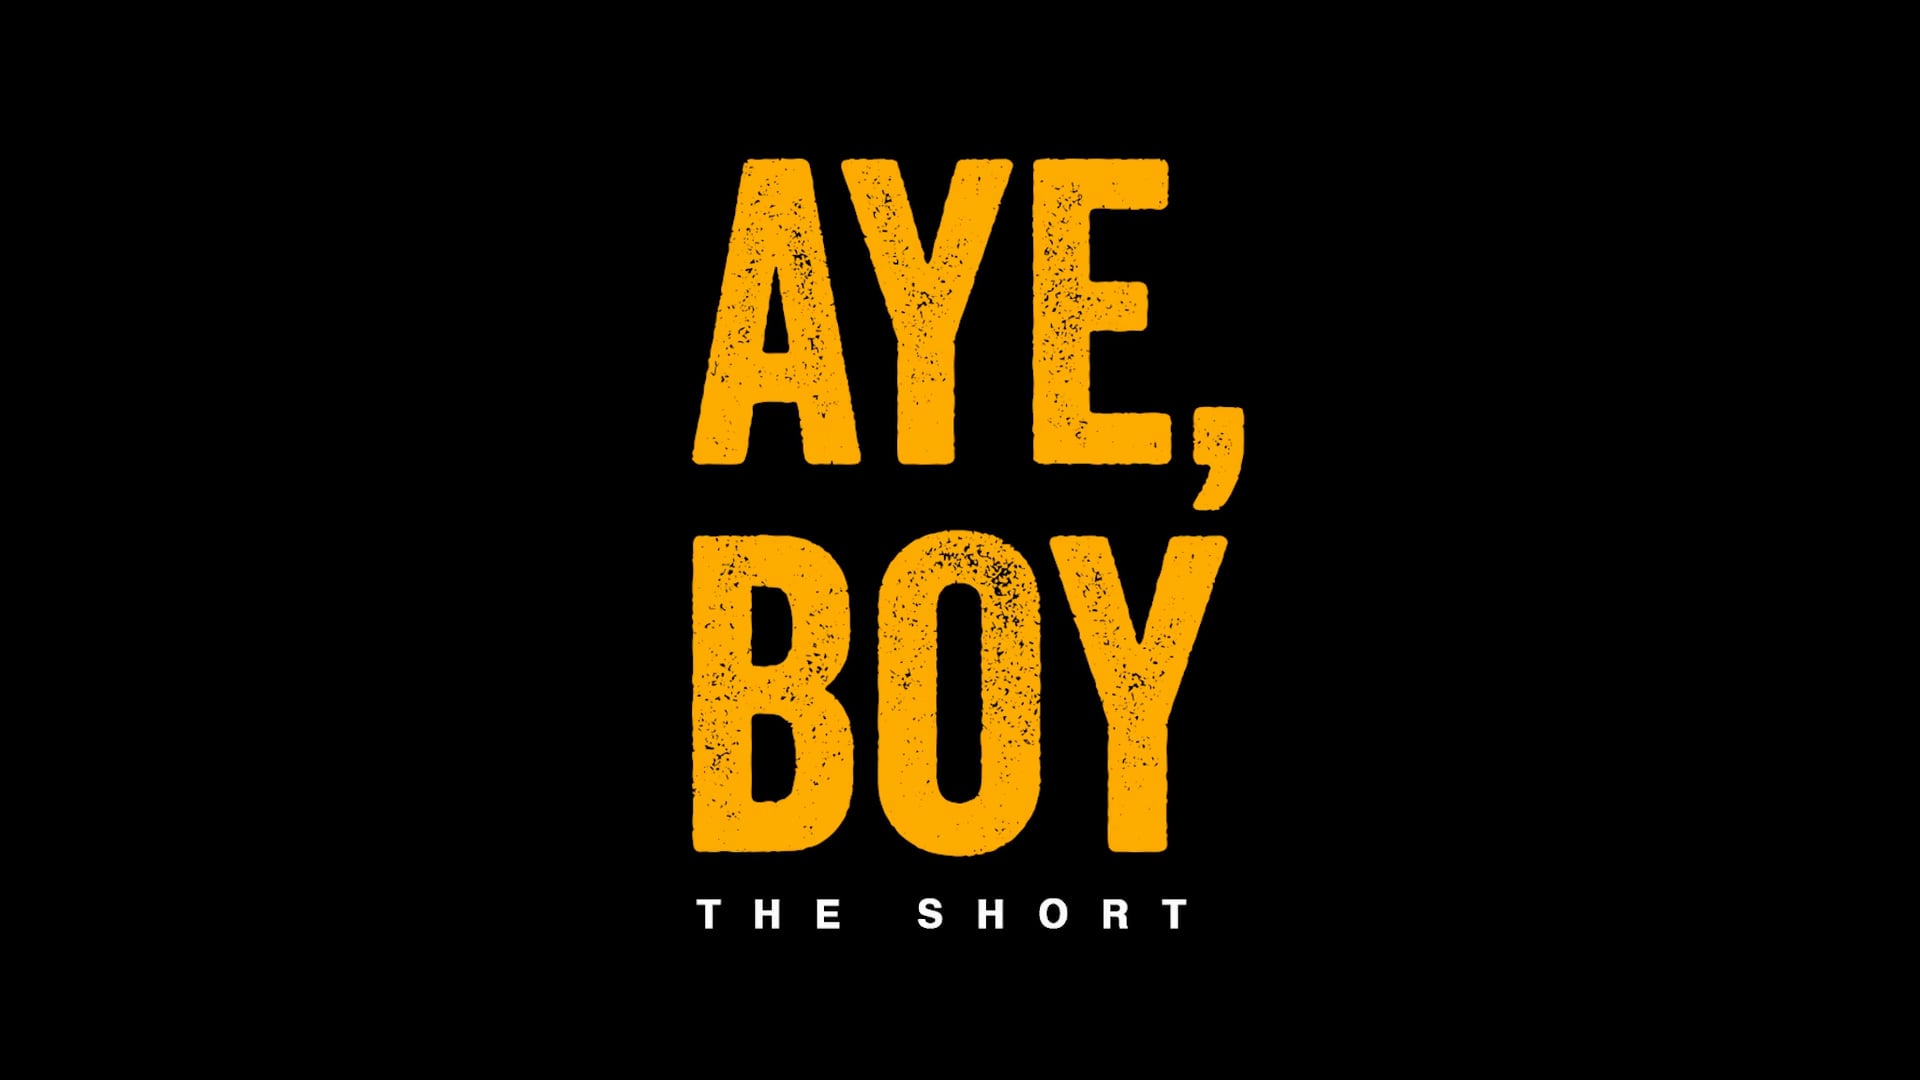 Official Aye, Boy (The Short) Trailer